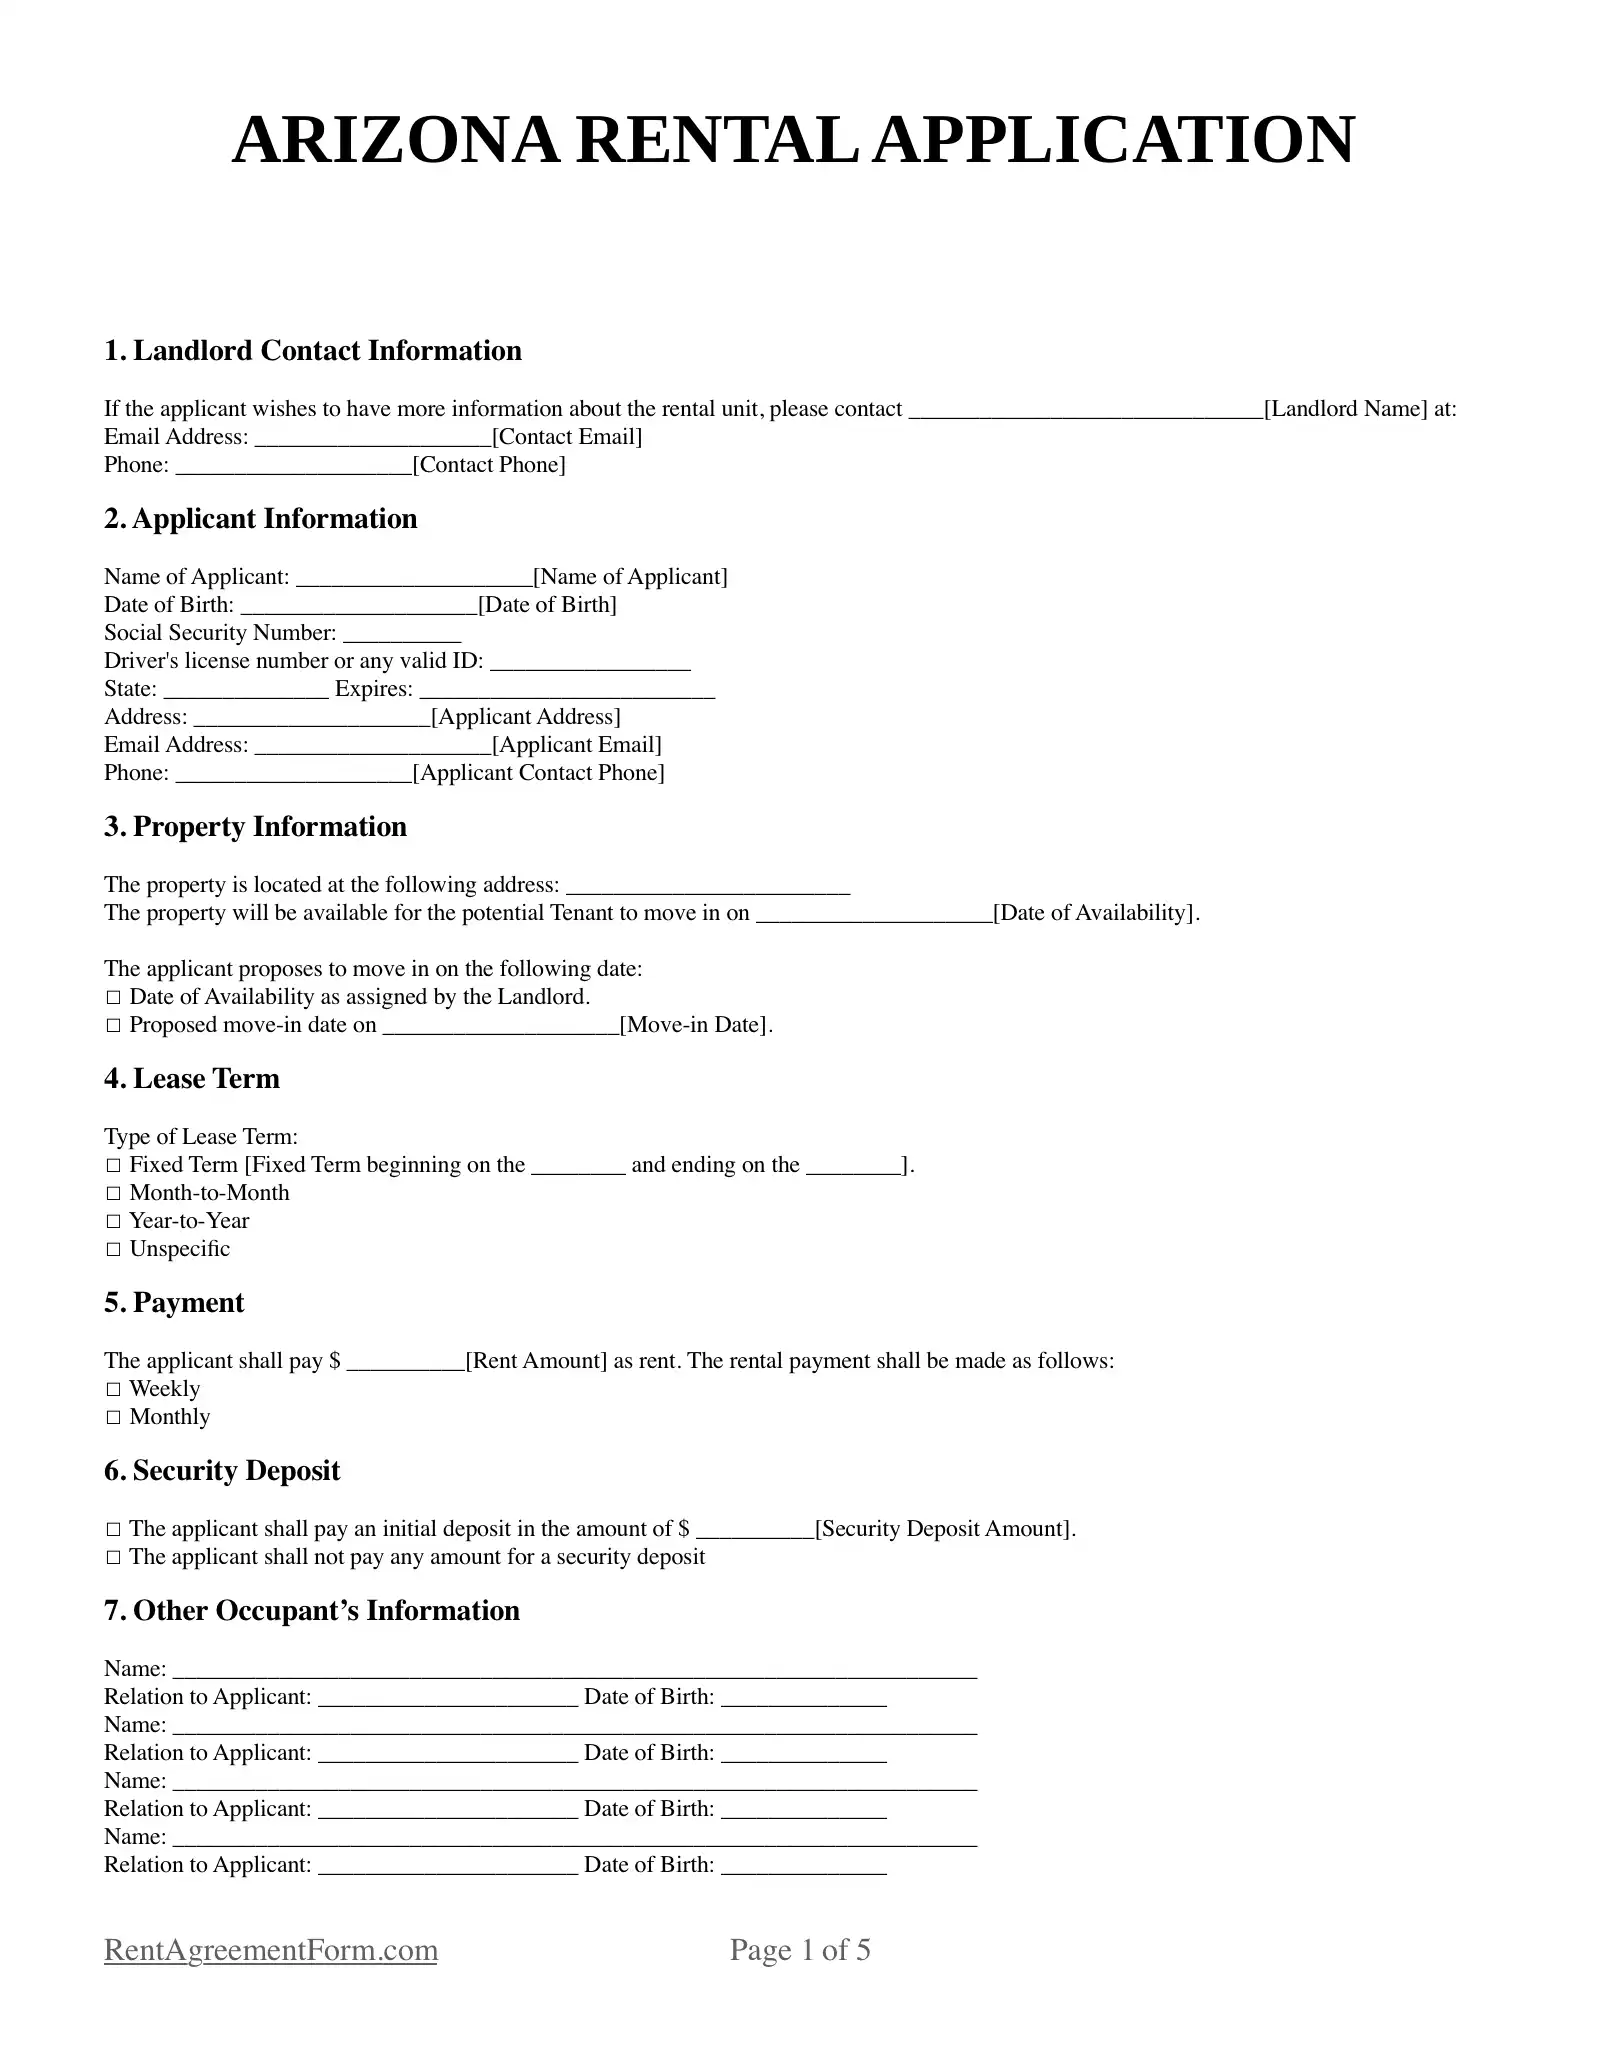 Arizona Rental Application Sample